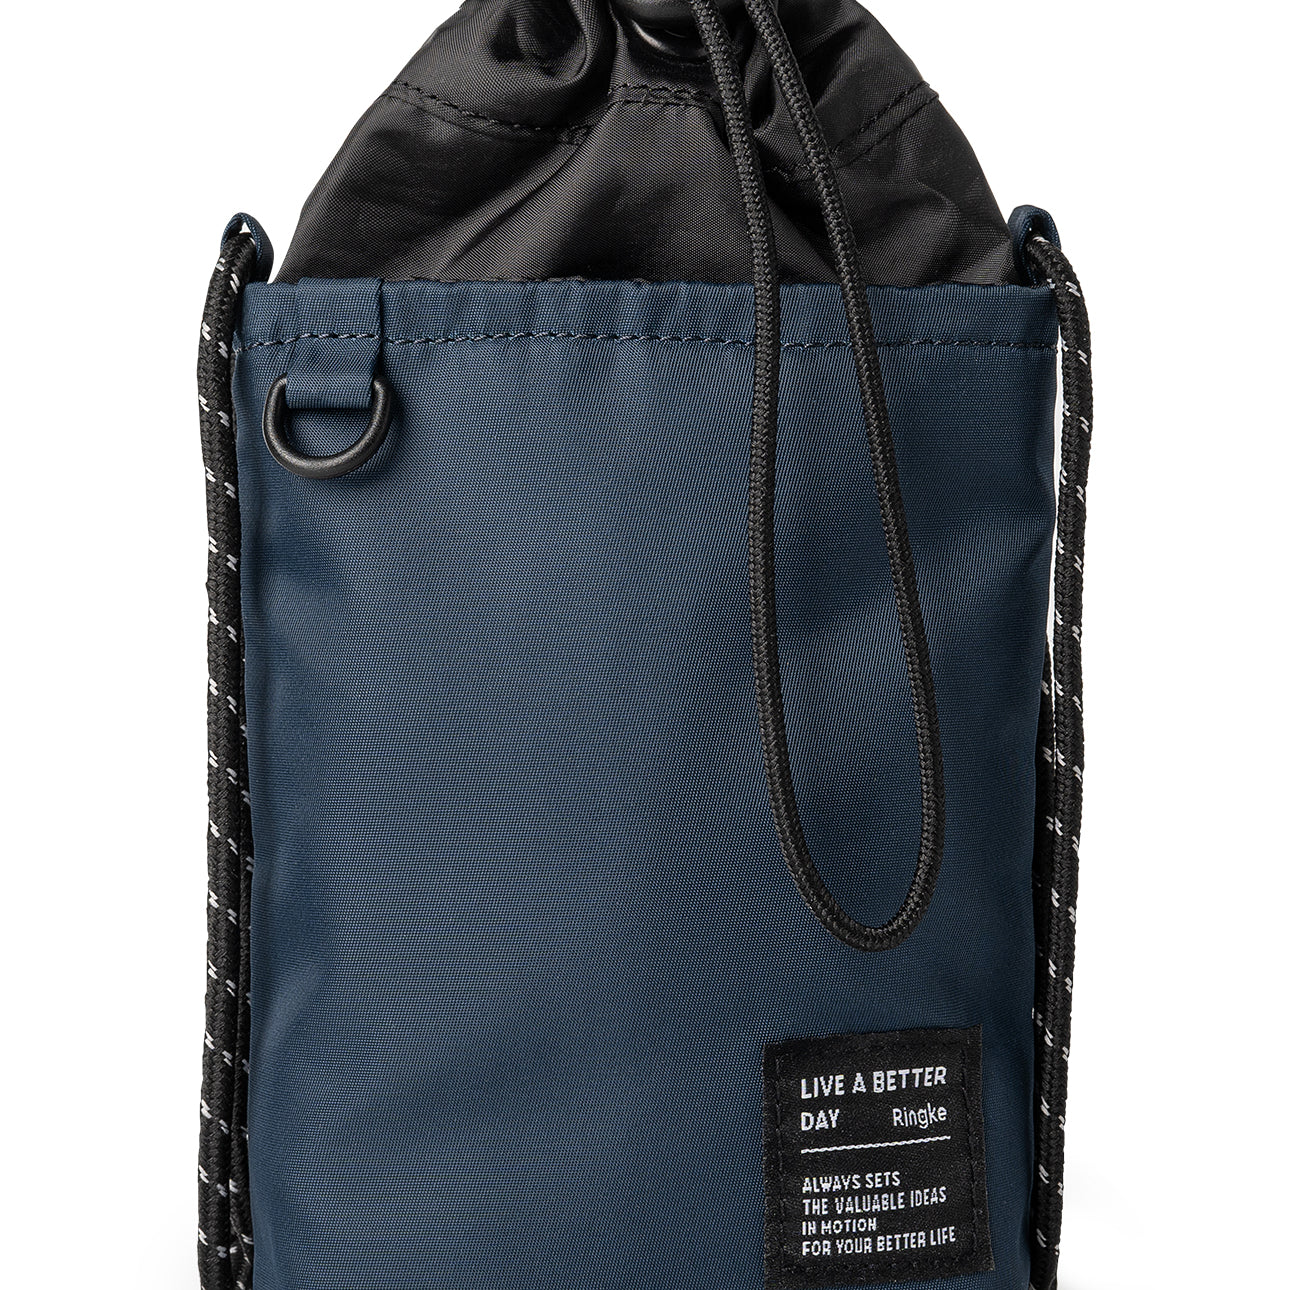 Mini Cross Bag | Bucket Bag - Ringke Official Store